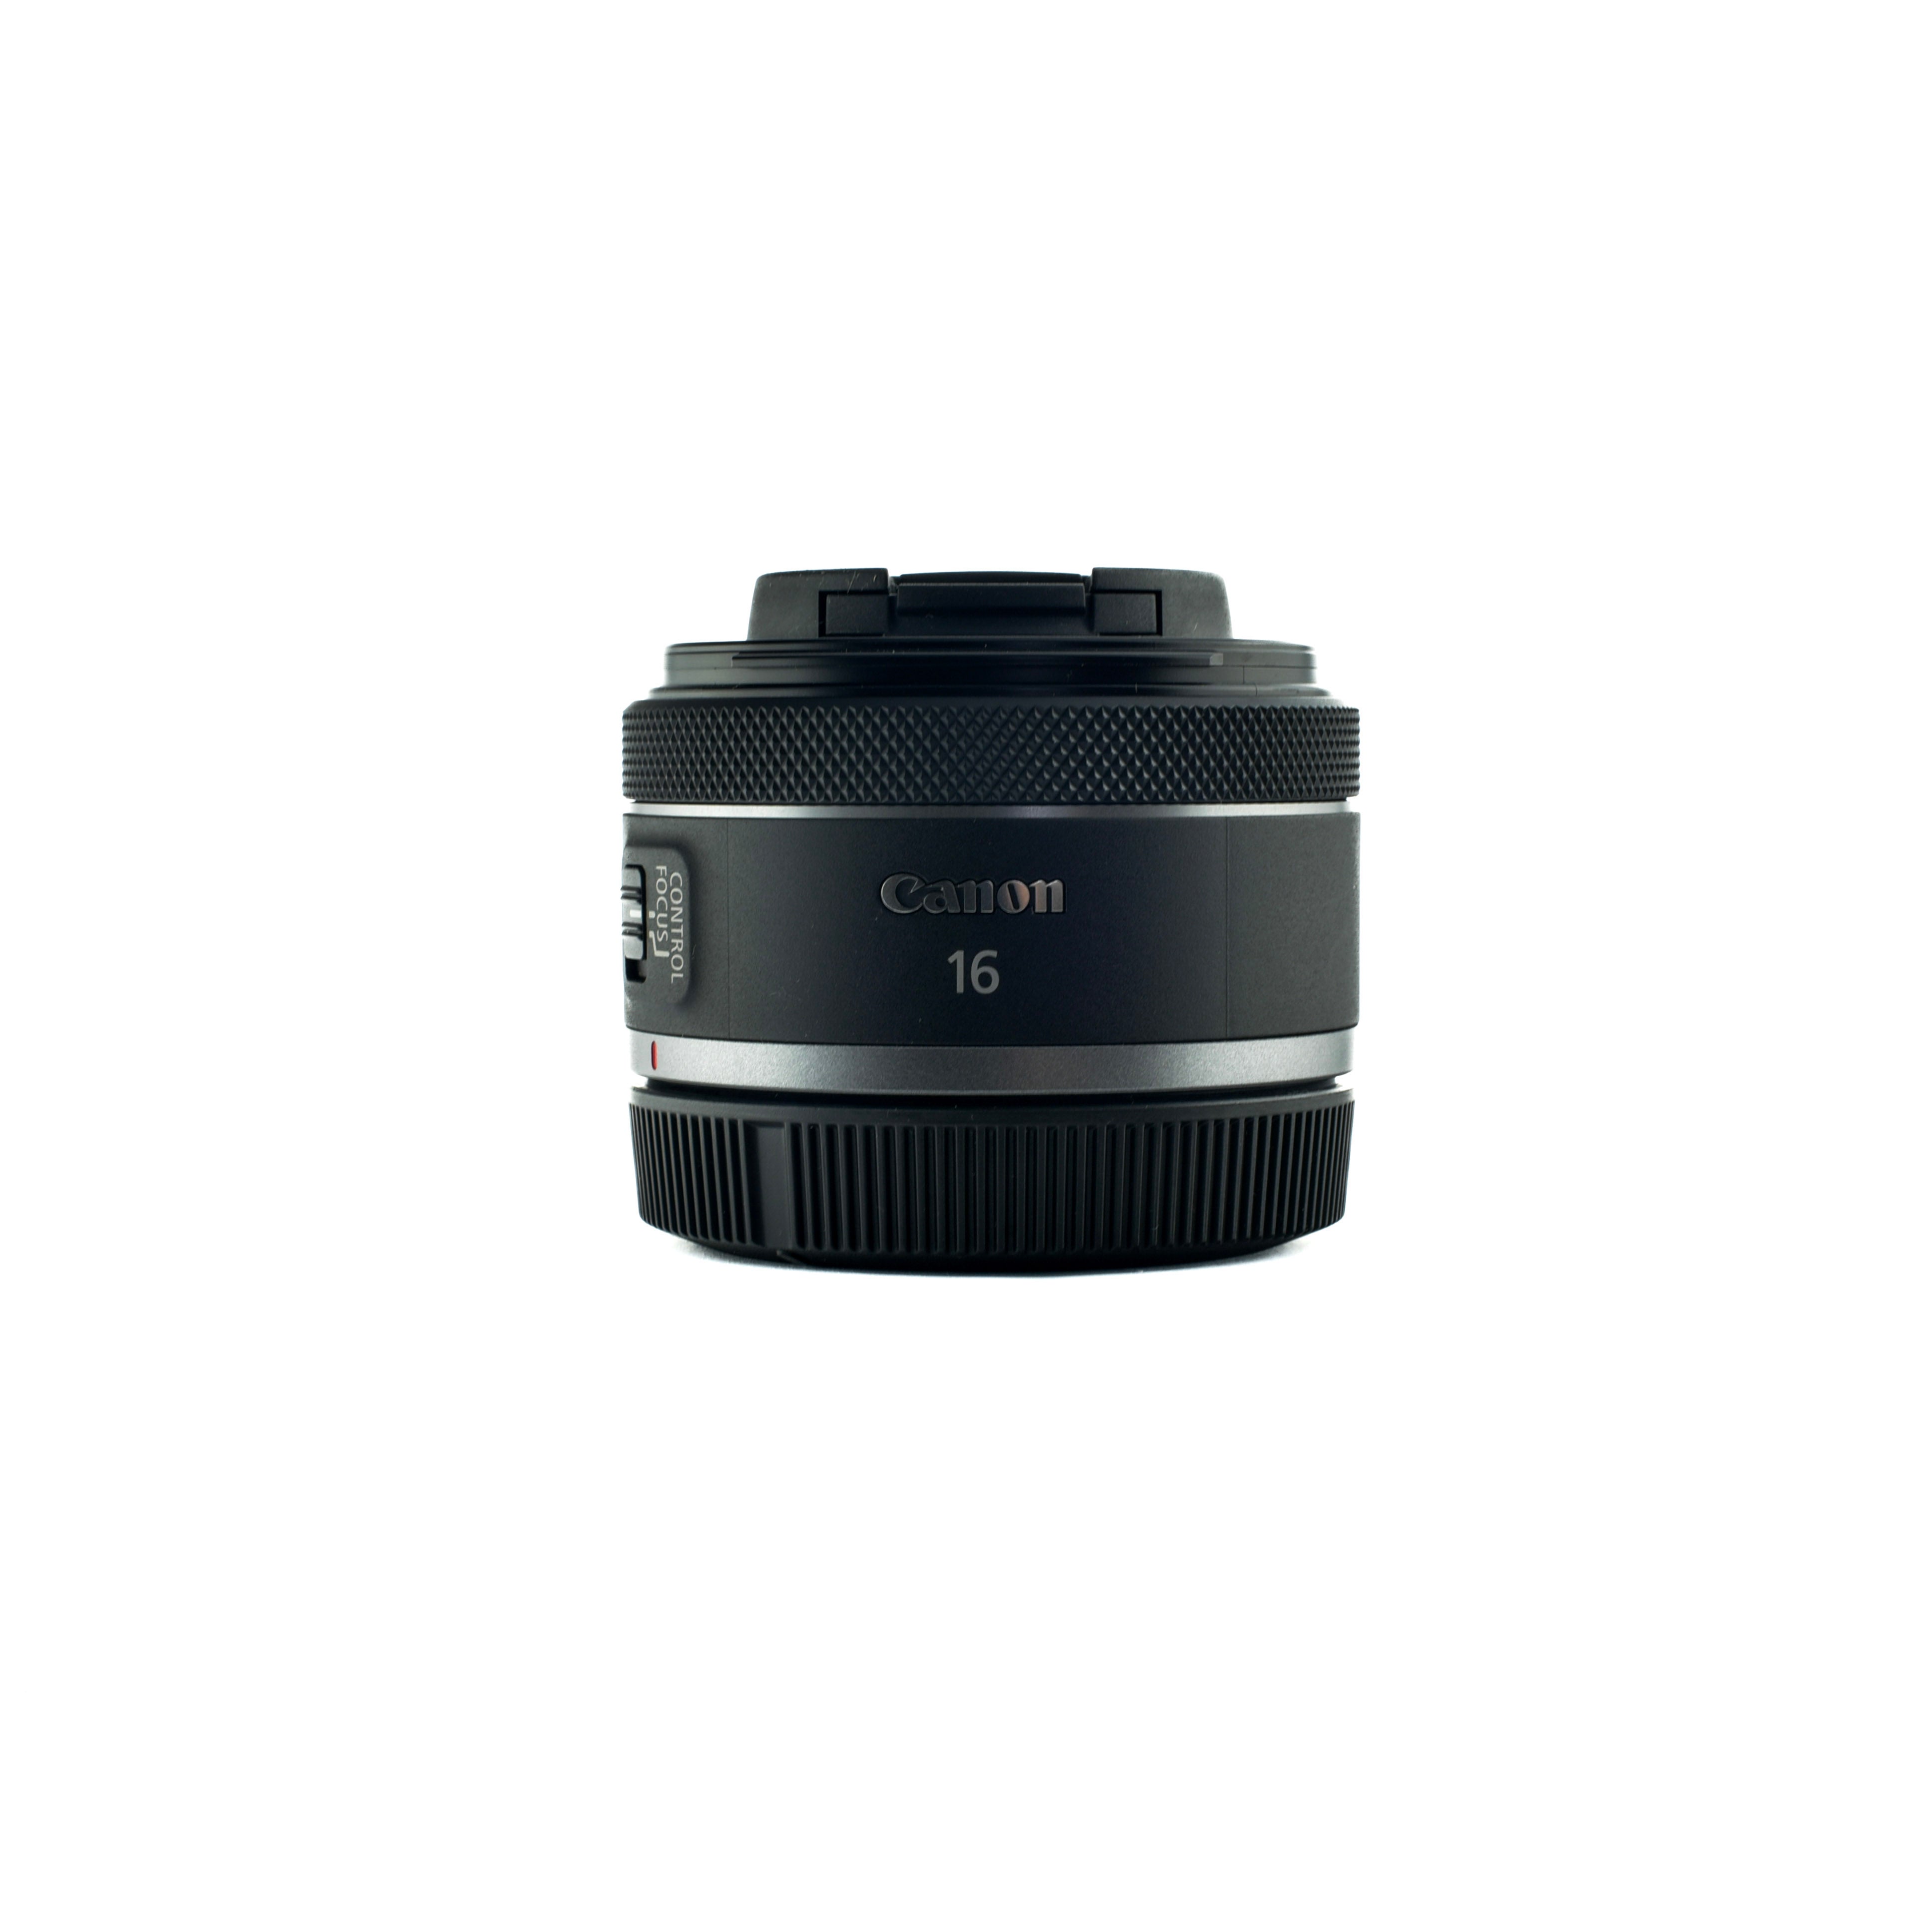 Canon RF 16mm f/2.8 IS STM lens